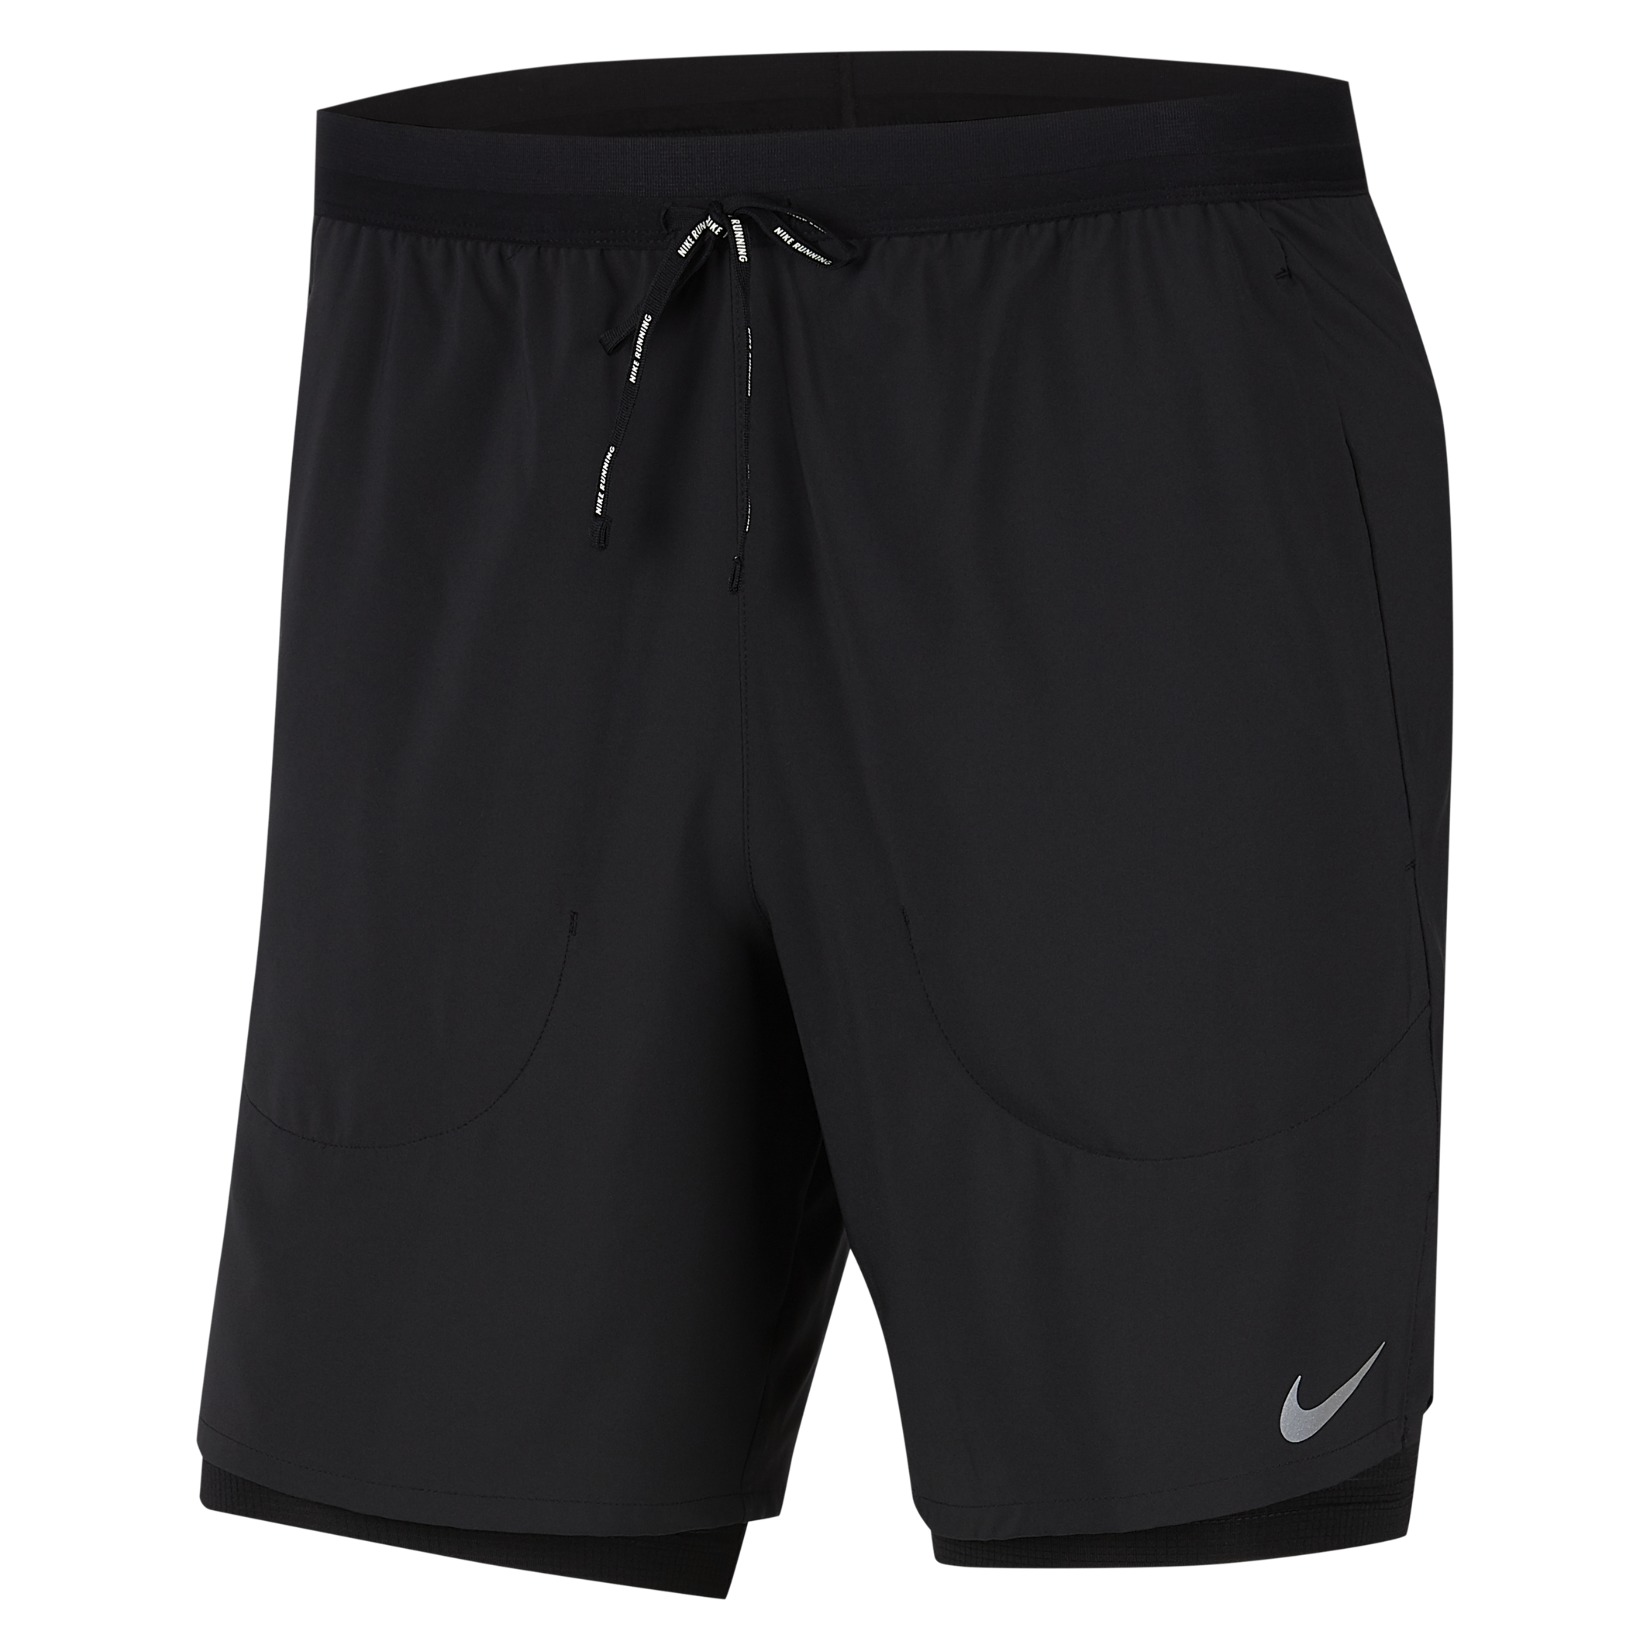 Nike Flex Stride 7" 2-In-1 Running Shorts